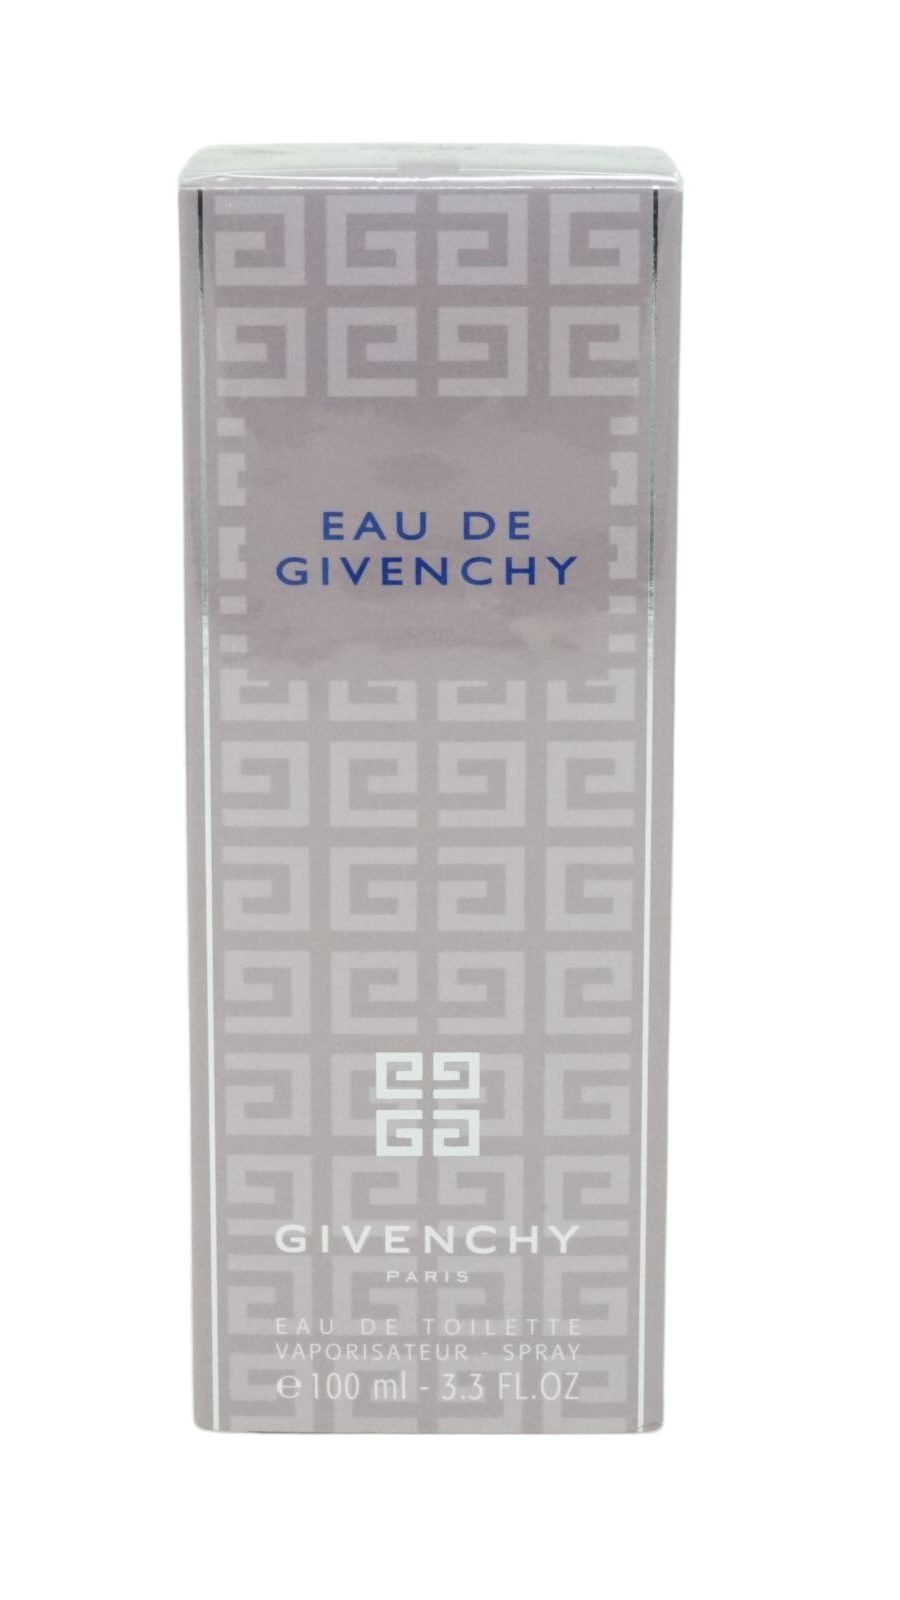 GIVENCHY Eau de Parfum Givenchy Eau de Givenchy Eau de Toilette Spray 100ml